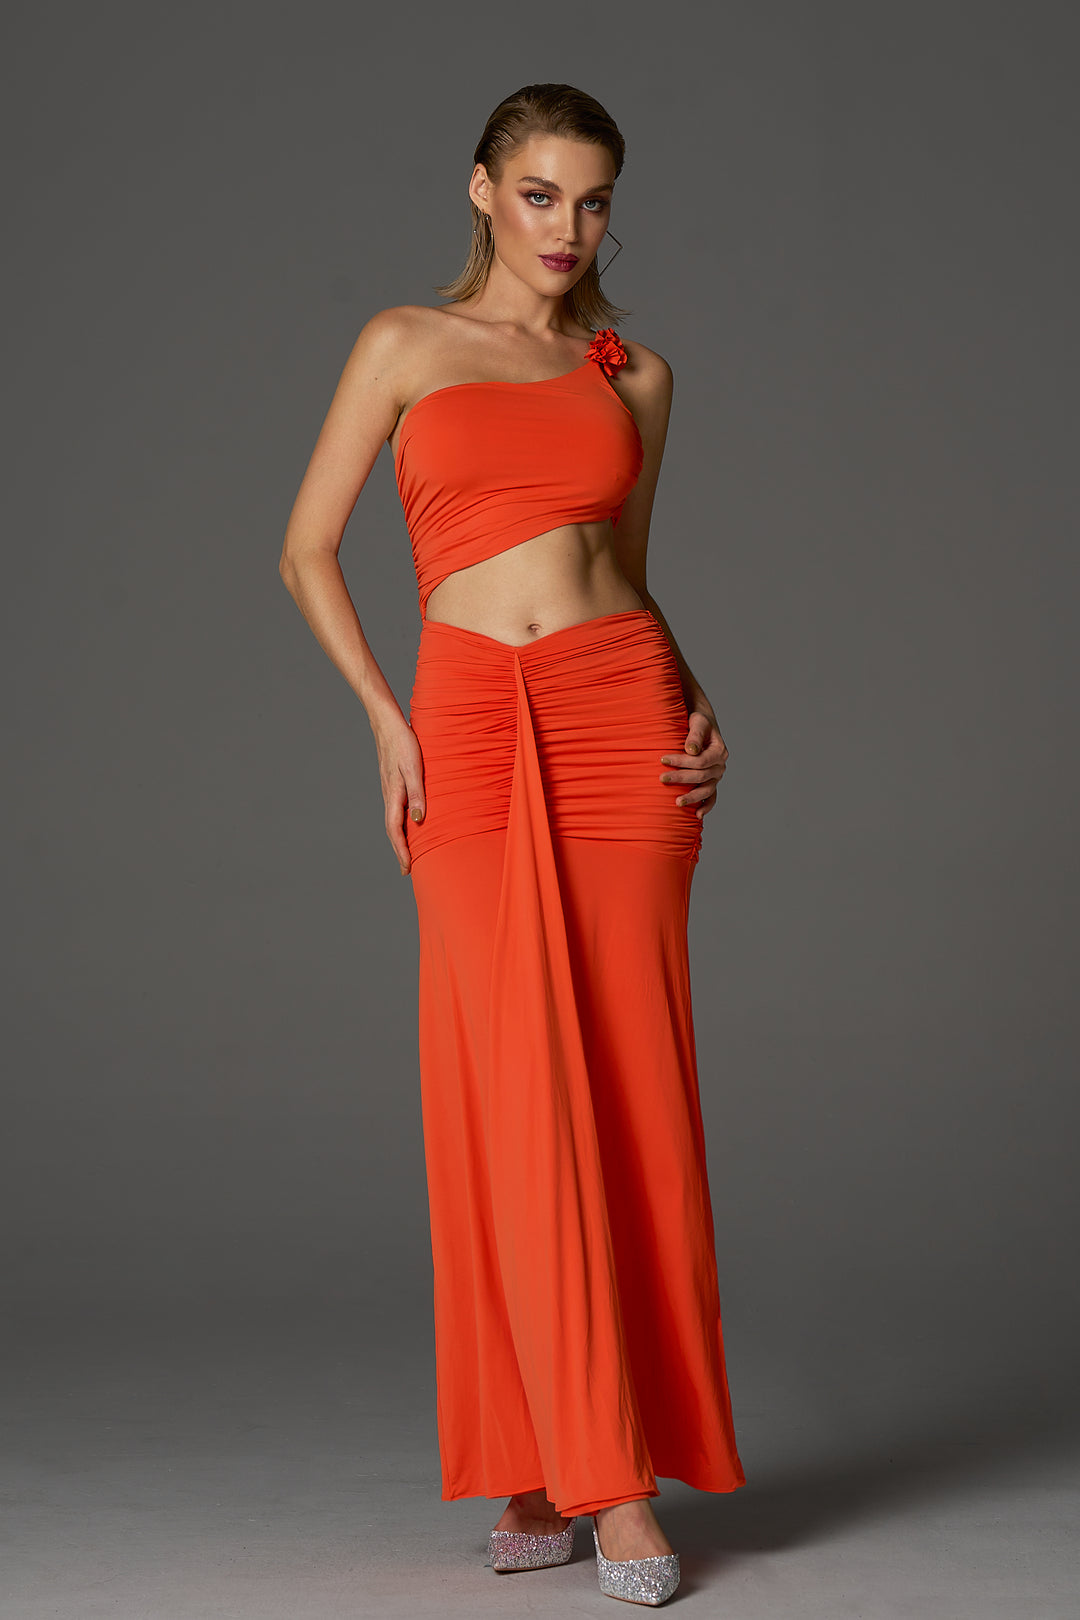 Sesidy Henley Asymmetrical Prom Dress in Orange